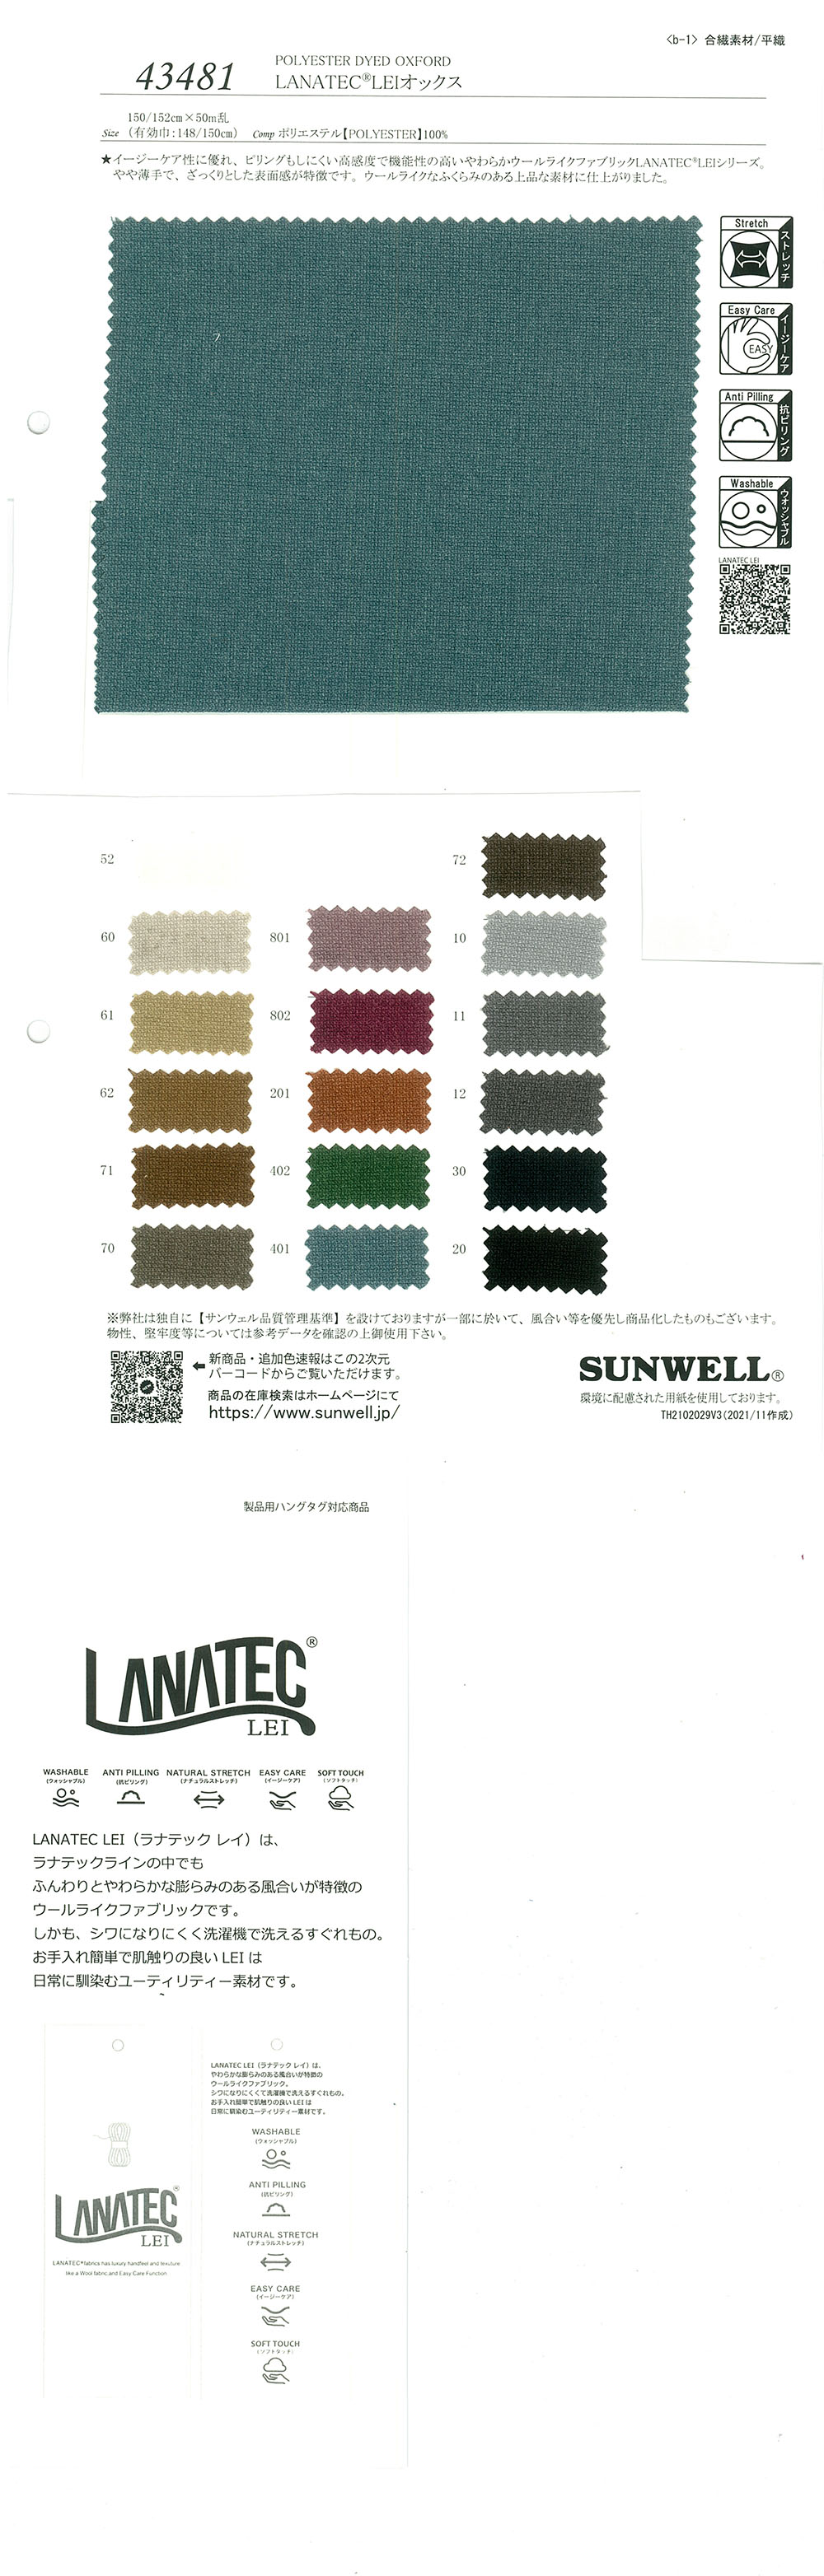 43481 LANATEC® LEI Oxford[Textilgewebe] SUNWELL